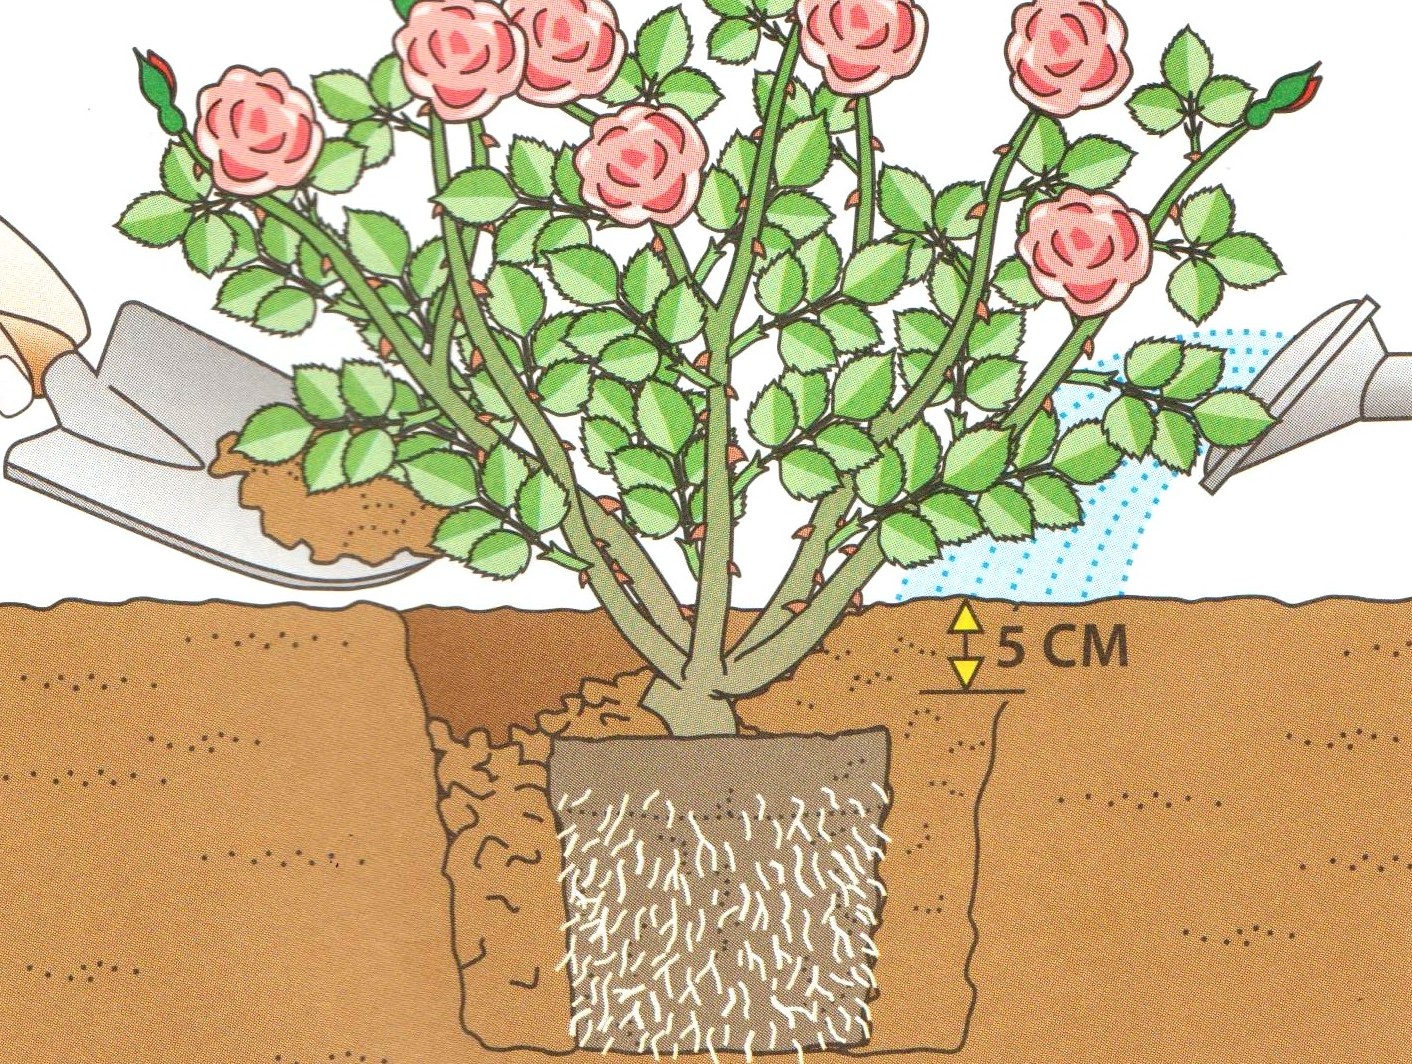 Пересадка роз в грунт